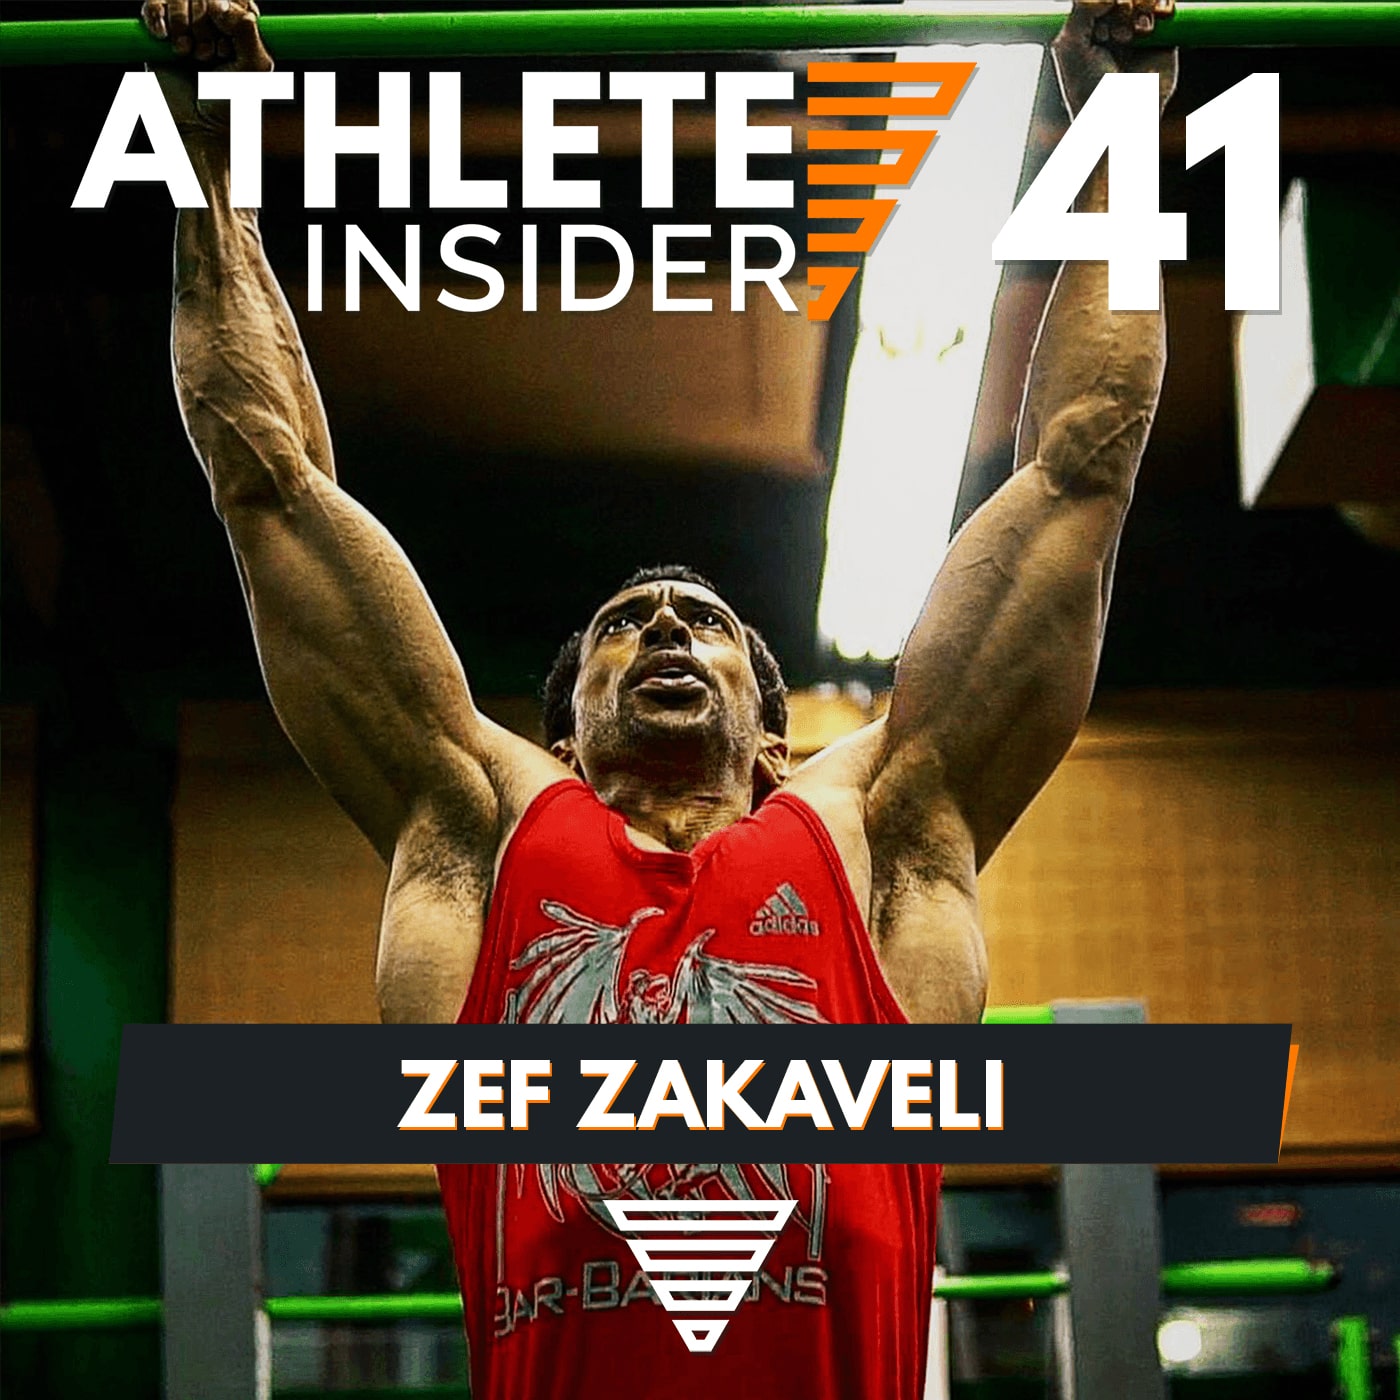 ZEF ZAKAVELI | Workout Schedule, Mindset & Injuries | Interview | The Athlete Insider Podcast #41